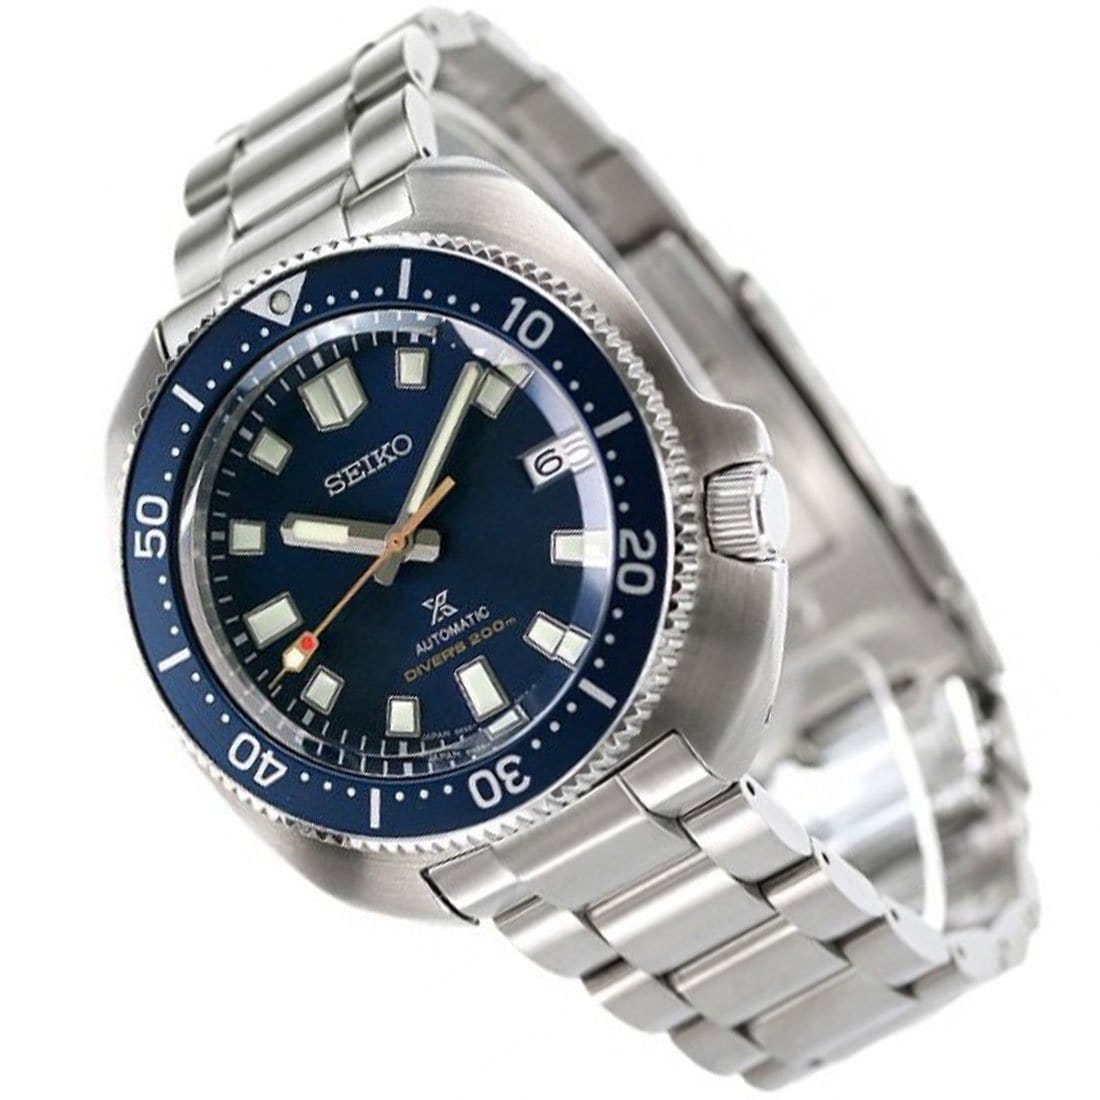 Seiko SBDC123 Prospex 55th Anniversary Limited Edition Automatic JDM Watch